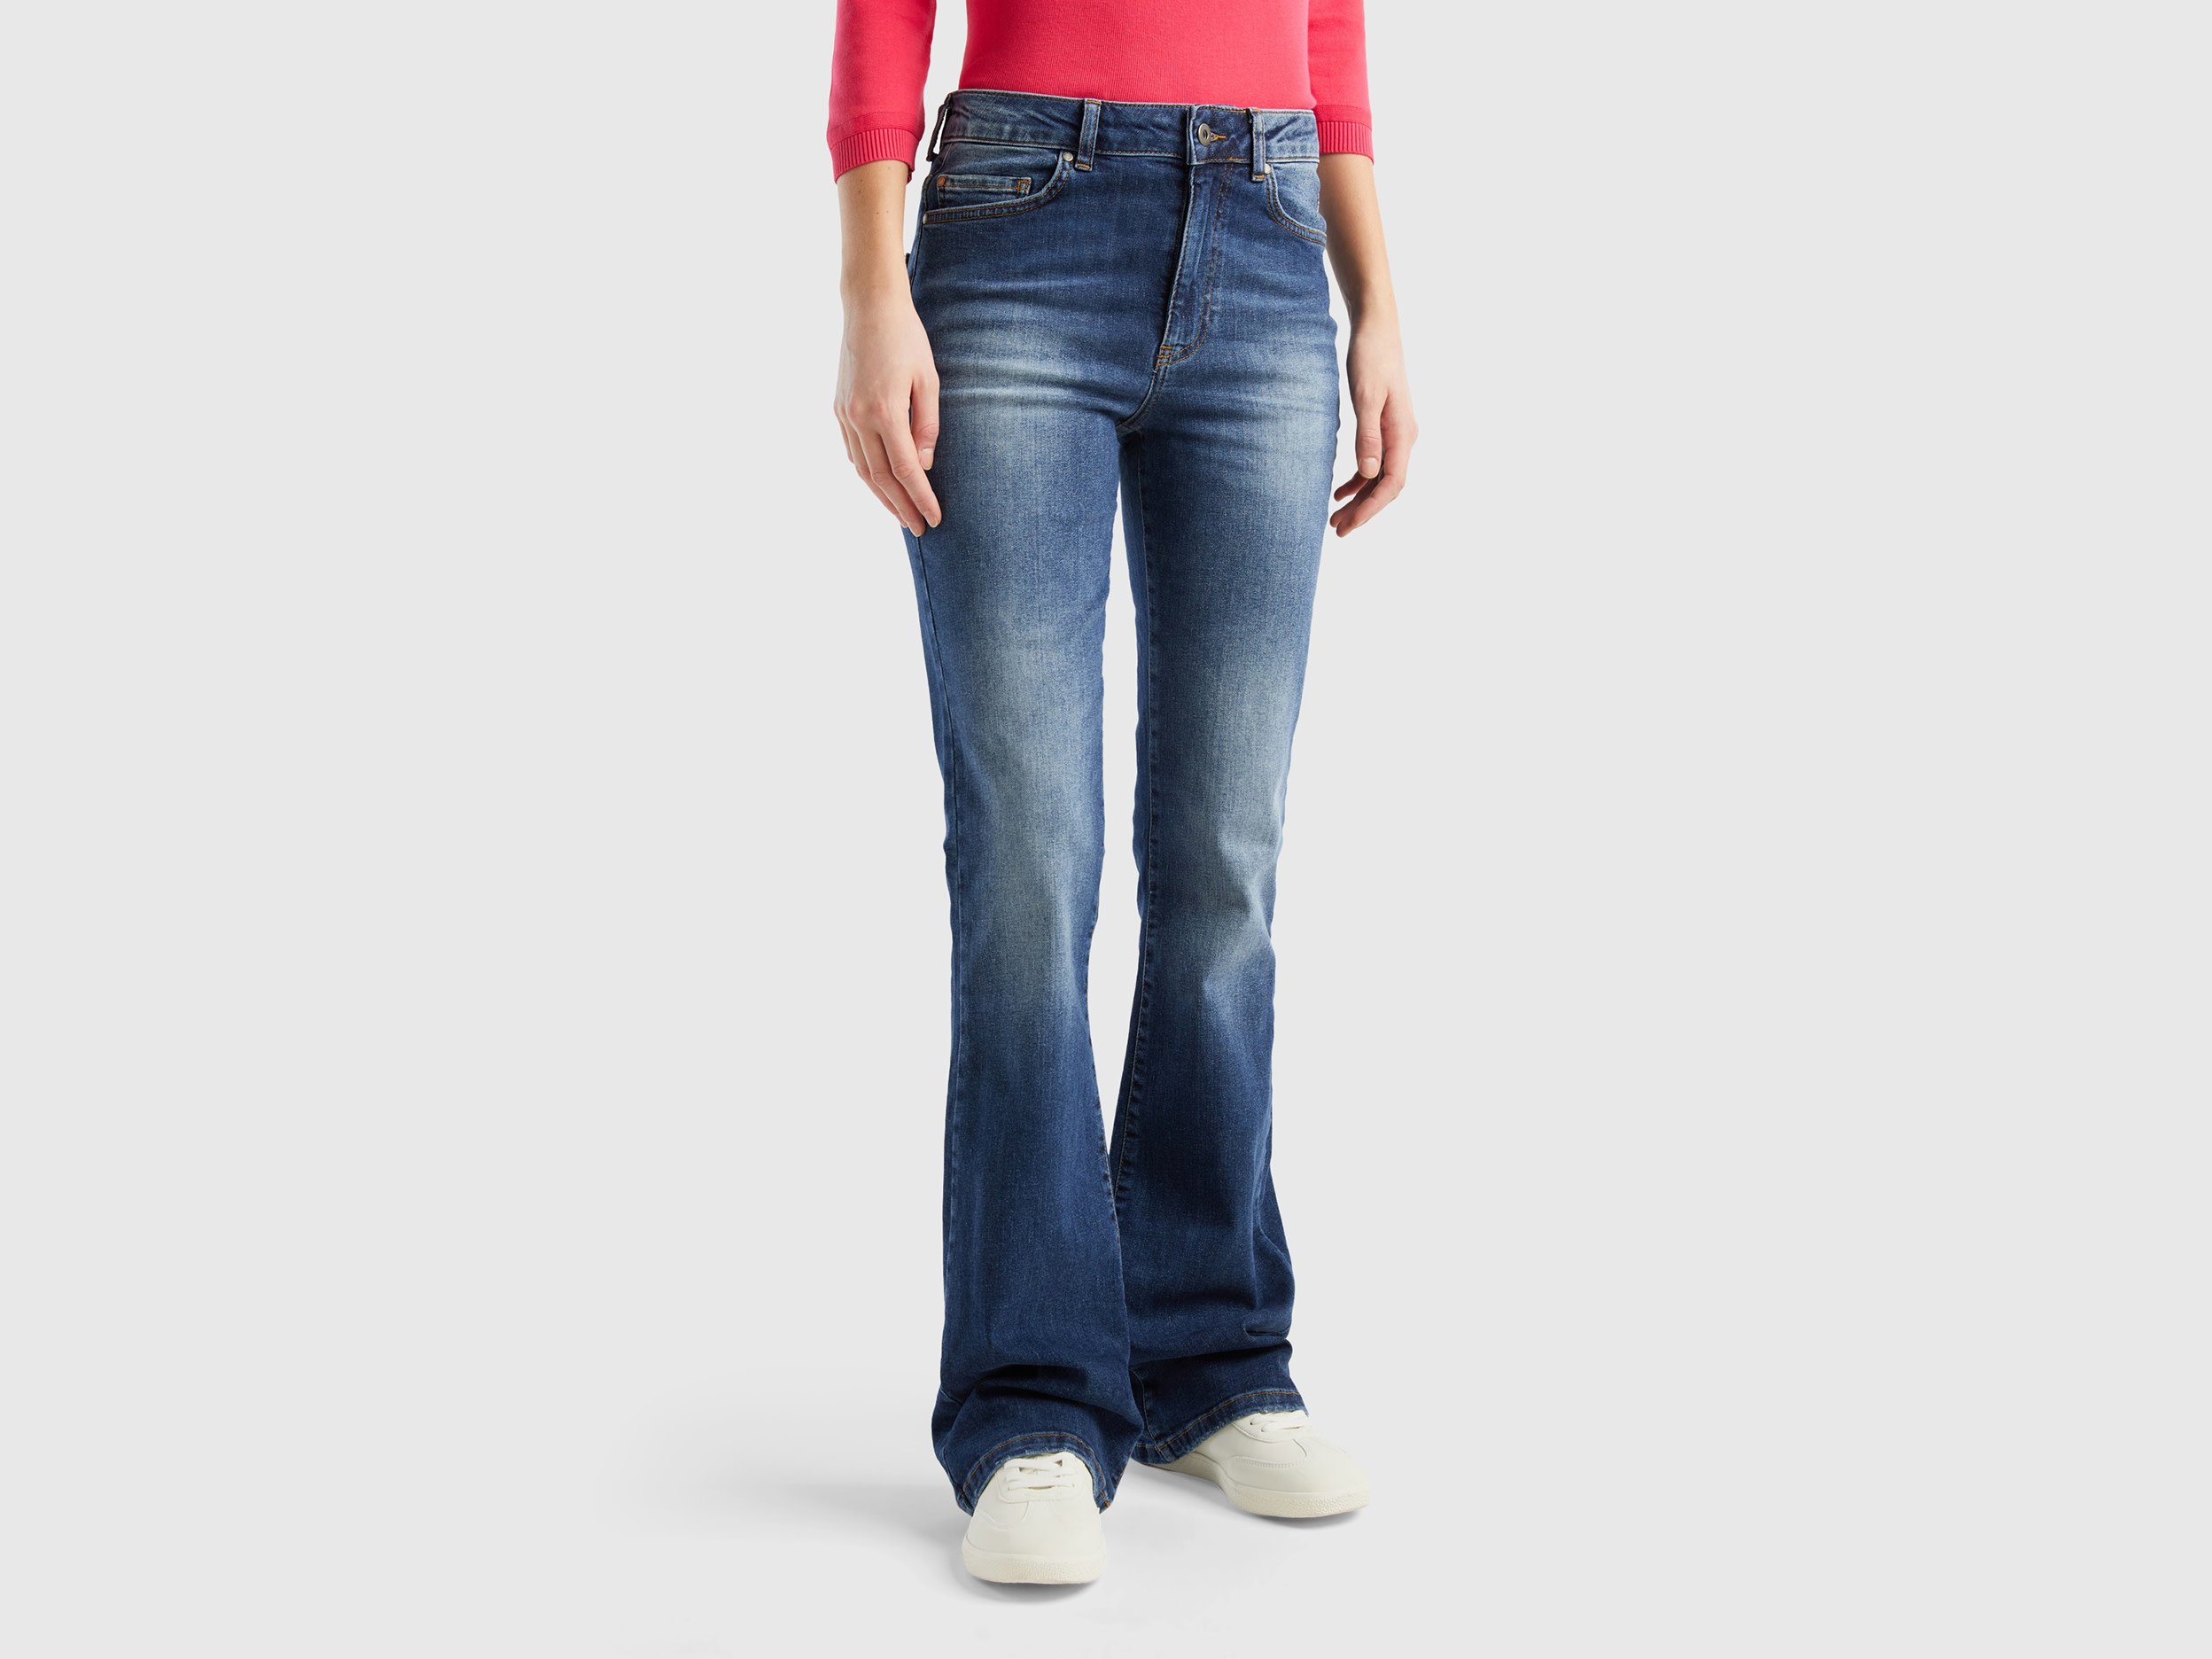 Benetton, Stretch Flared Jeans, size 36, Dark Blue, Women